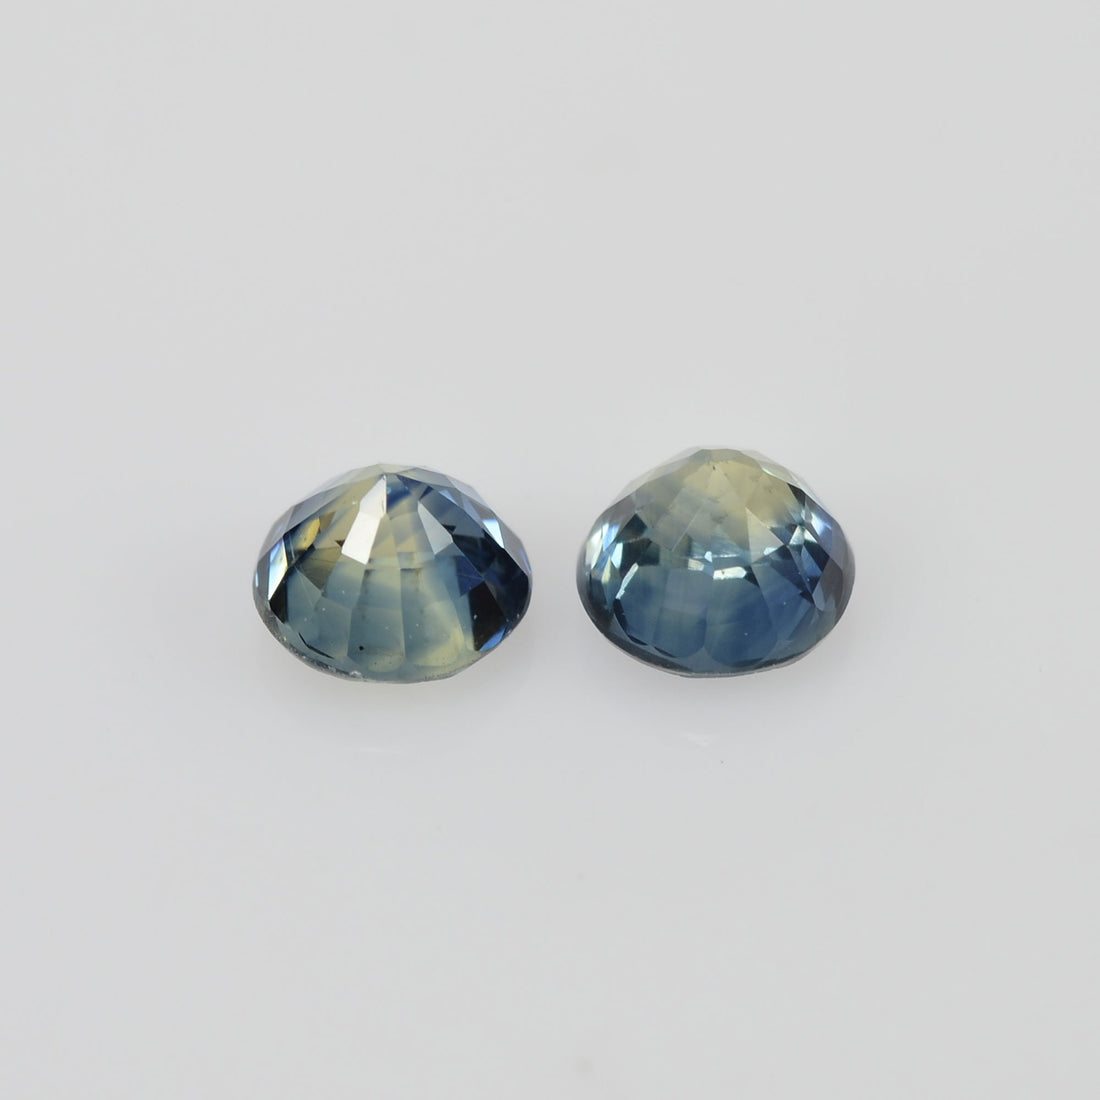 4.00 mm Natural Blue Sapphire Loose Pair Gemstone Round Cut